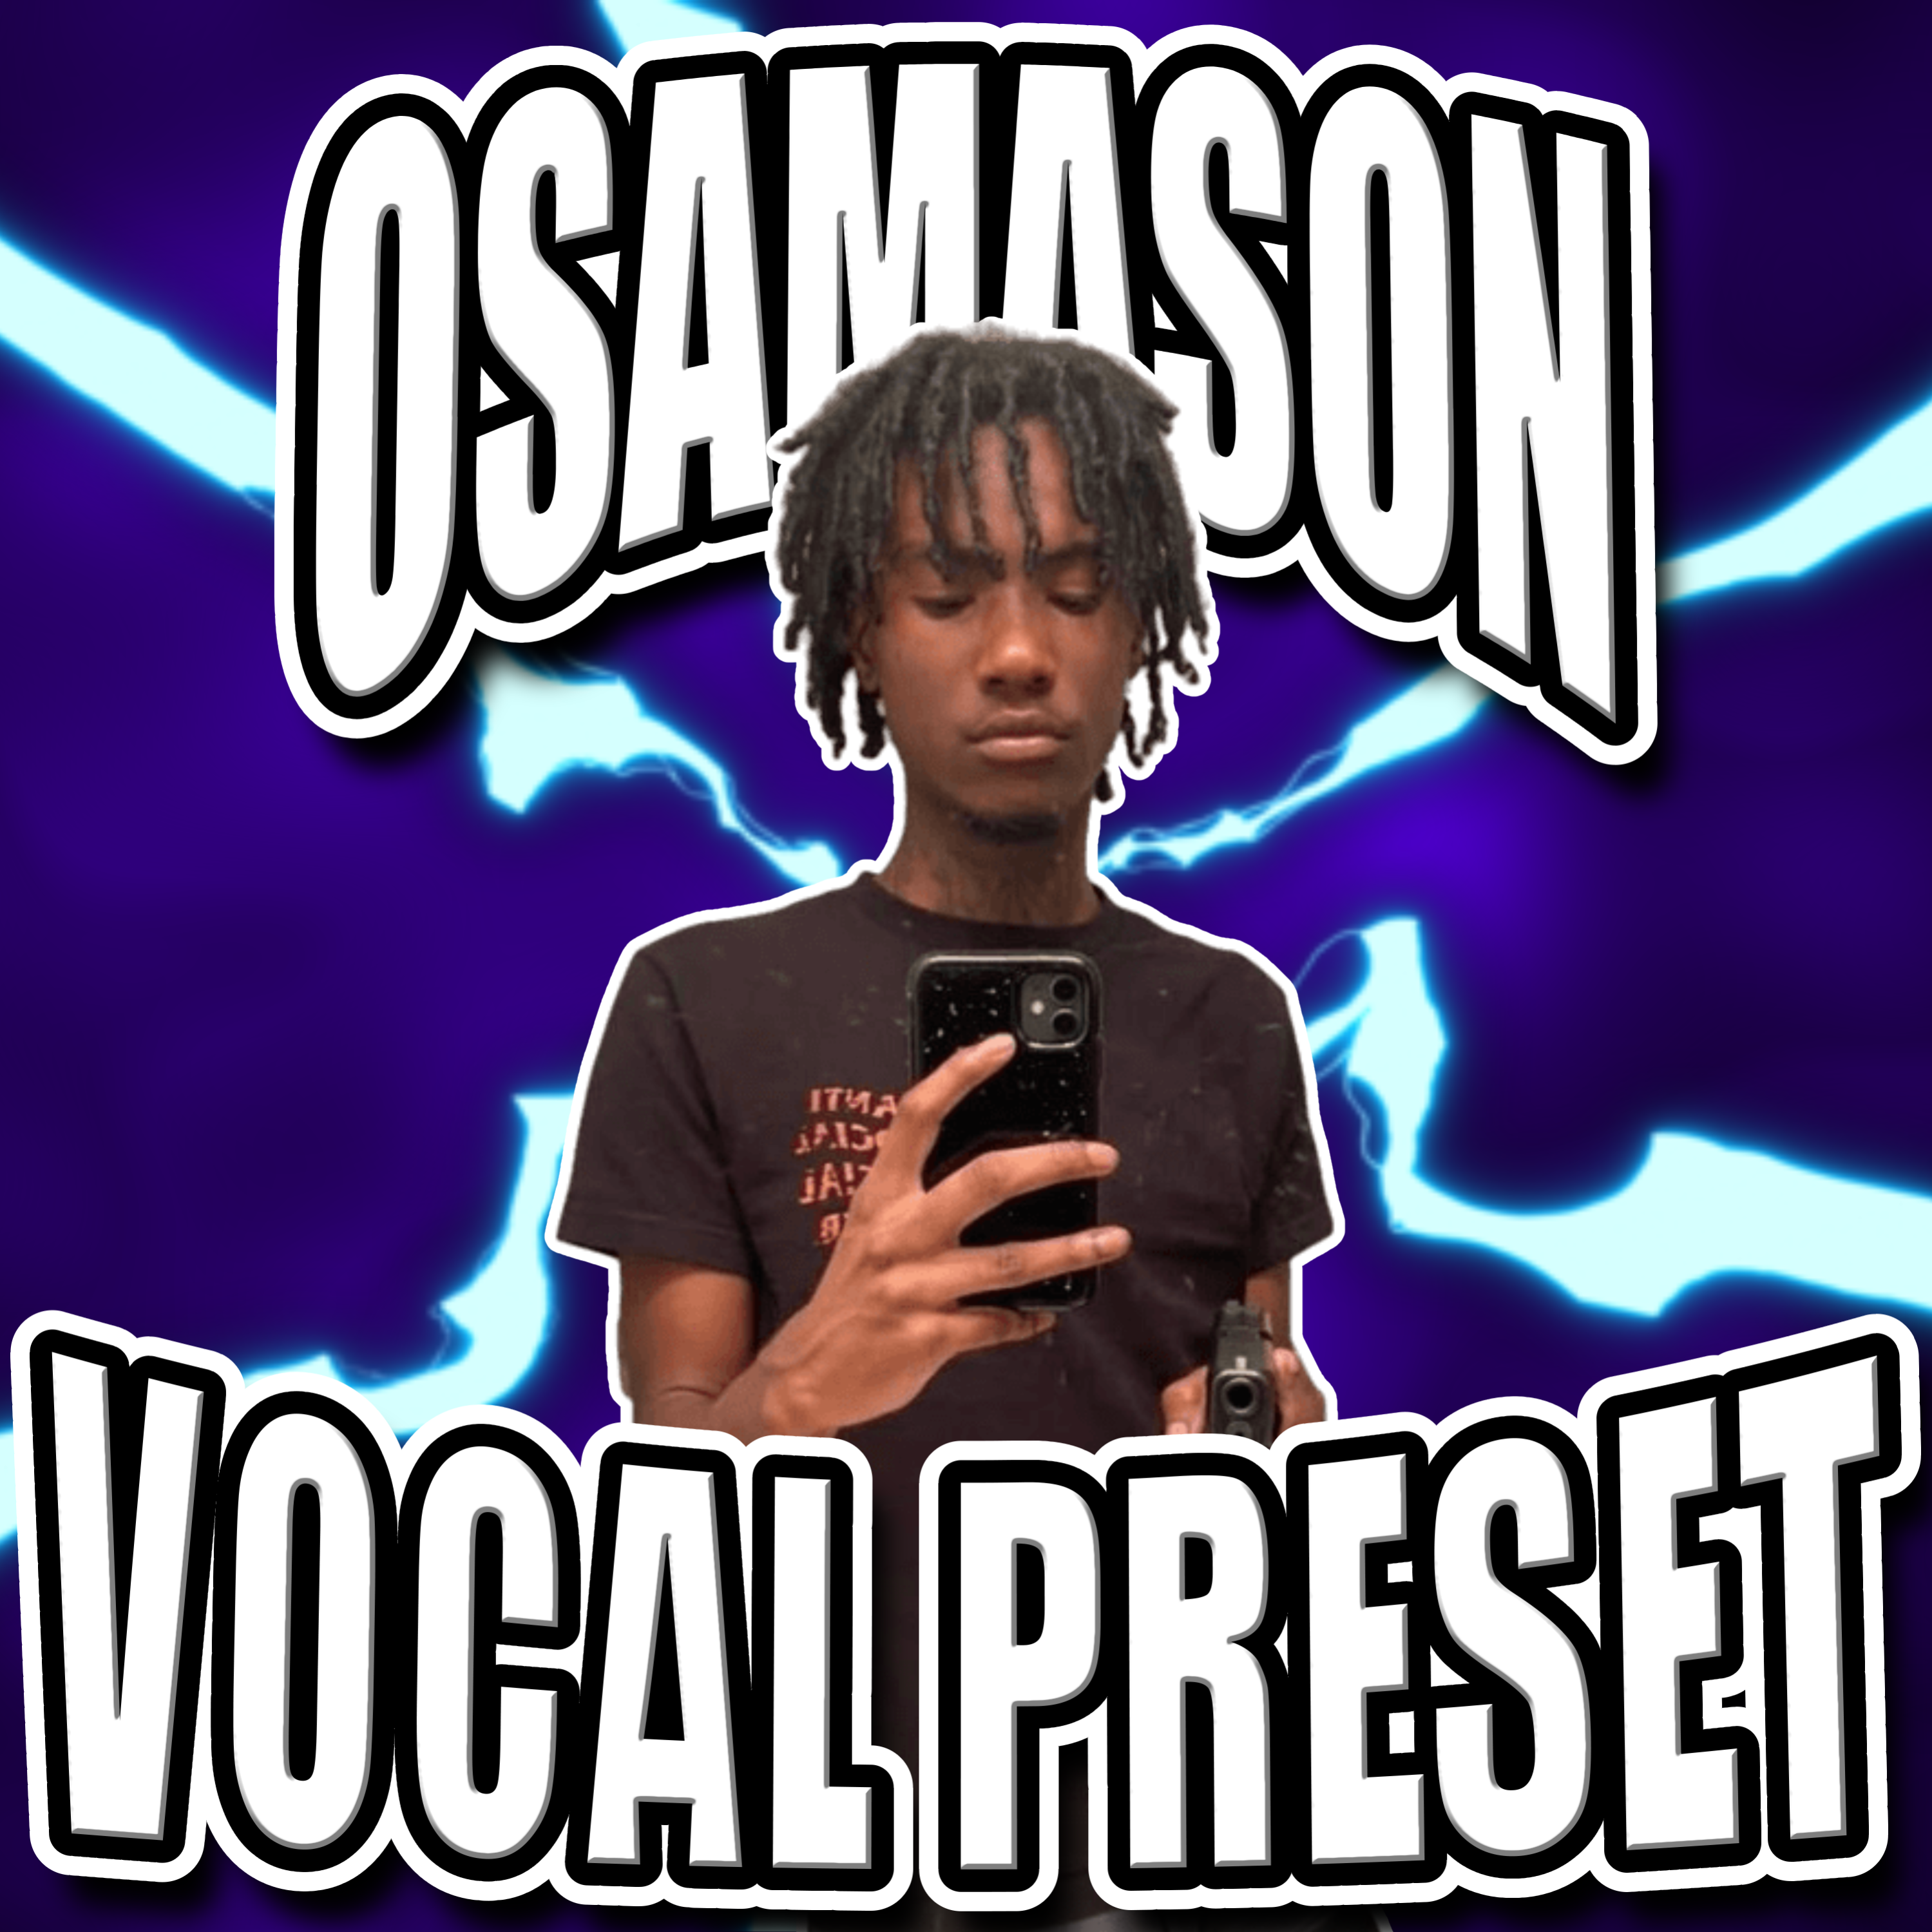 The Osamason Vocal Preset